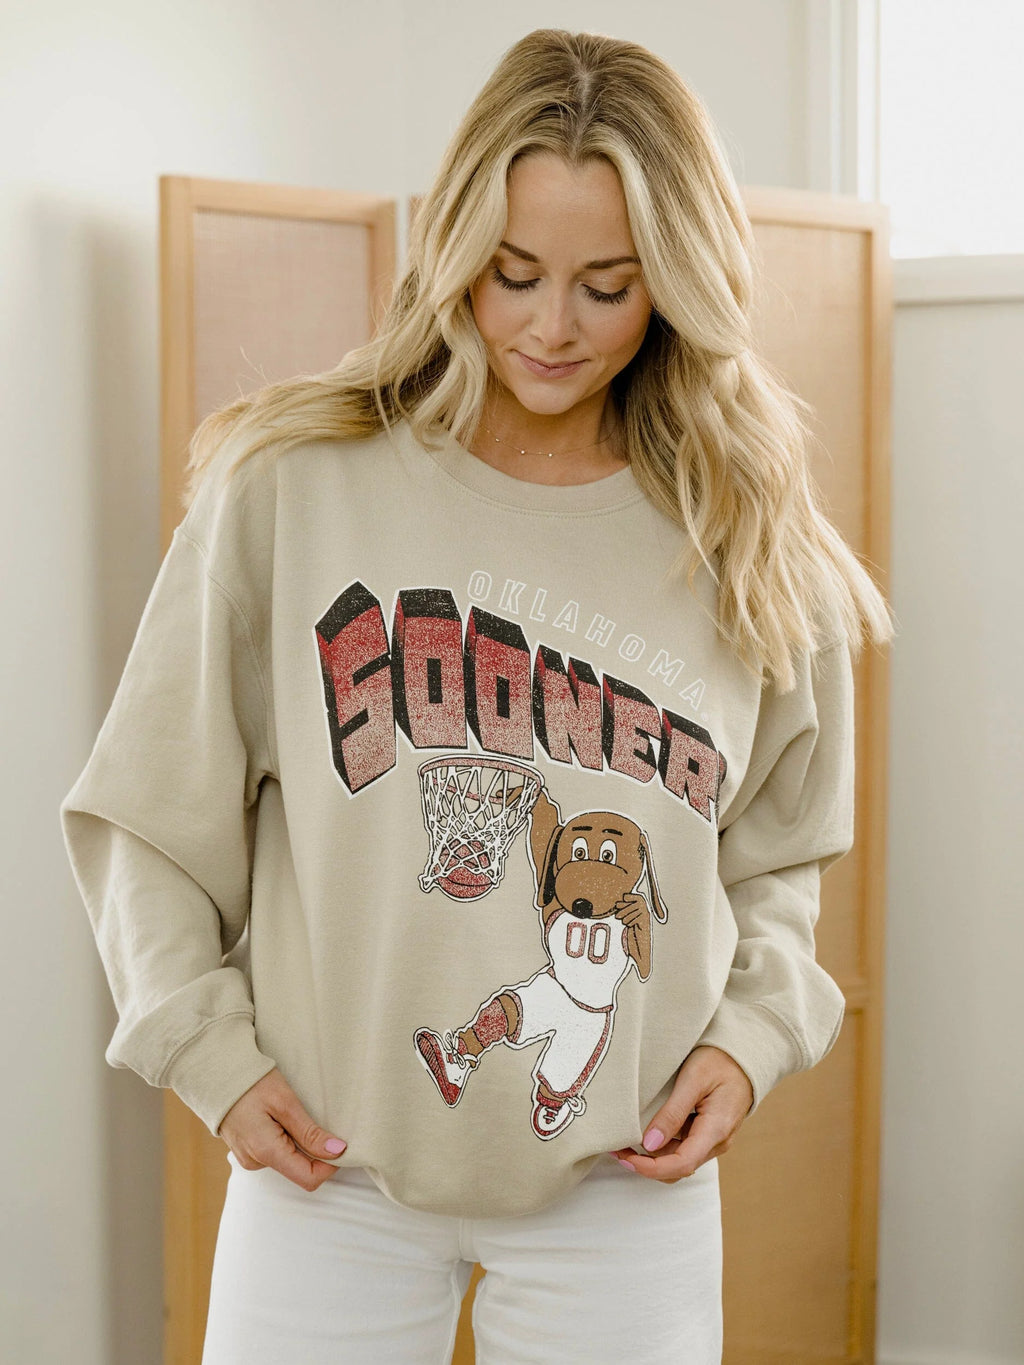 OU Sooners Basketball Mascot Dunk Sand Thrifted Graphic Sweatshirt by LivyLu